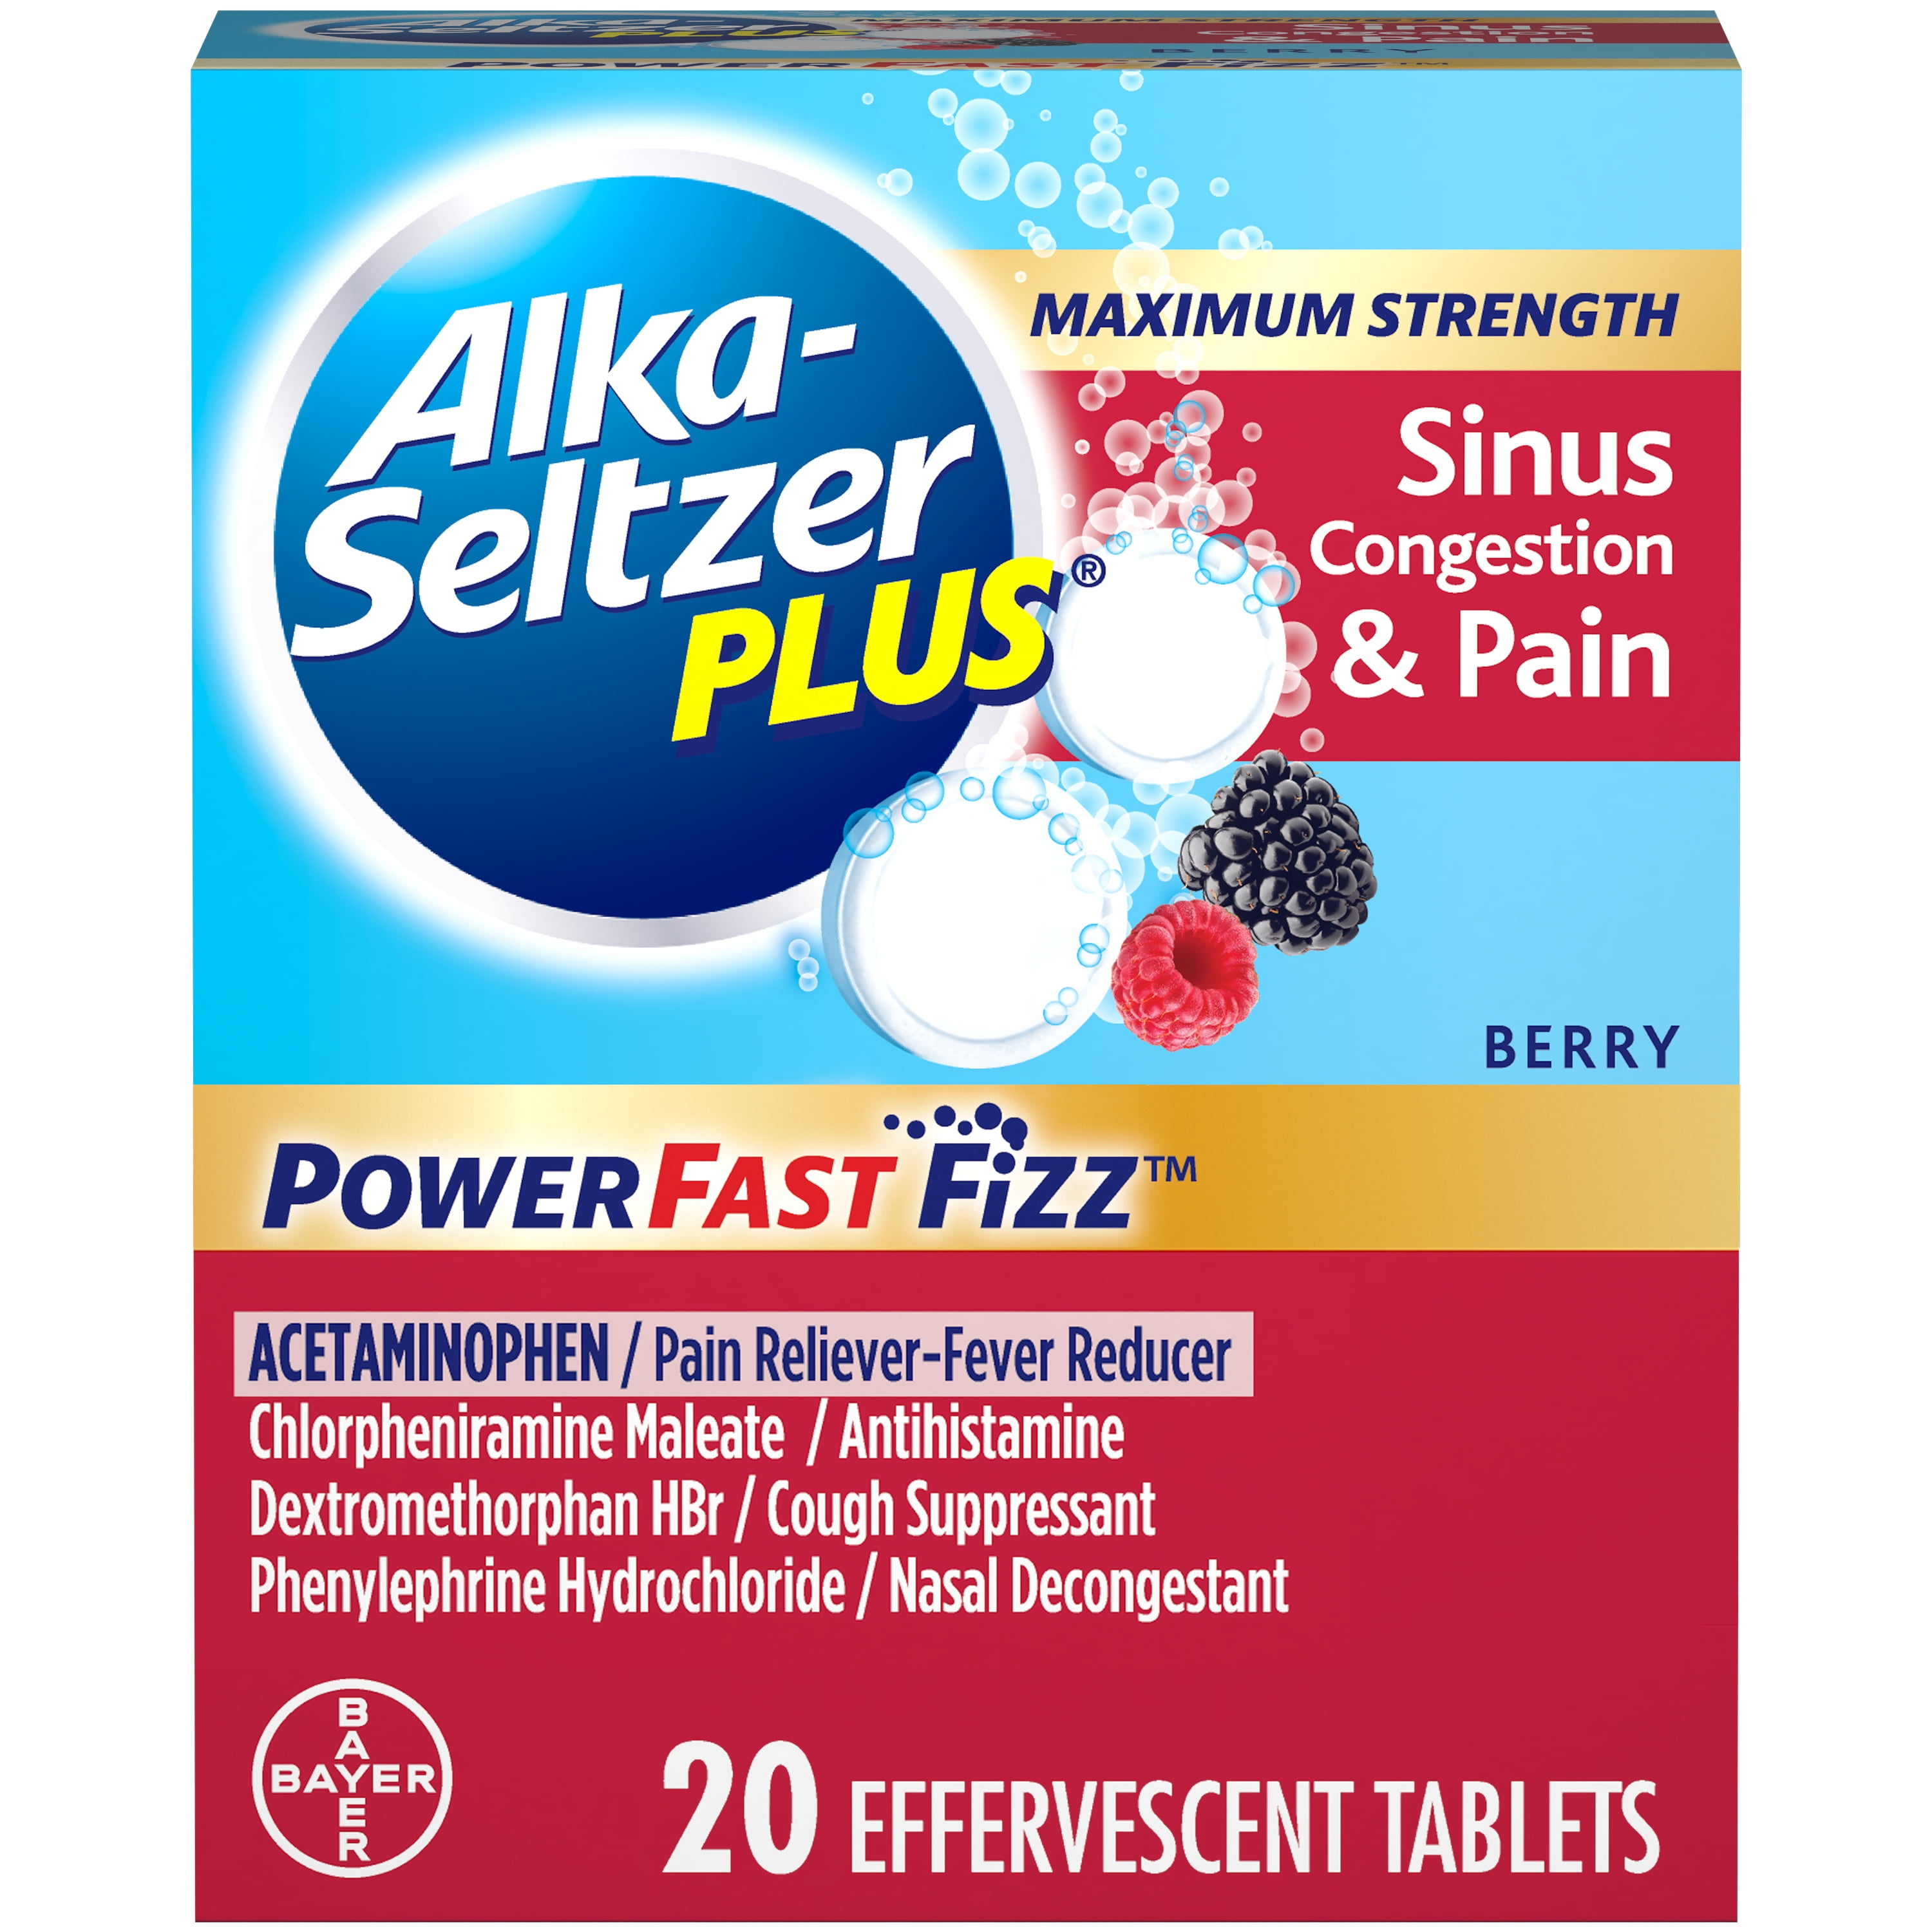 Alka-Seltzer Plus Maximum Strength Sinus Congestion & Pain Medicine, Powerfast Fizz Effervescent Tablets, 20 Count